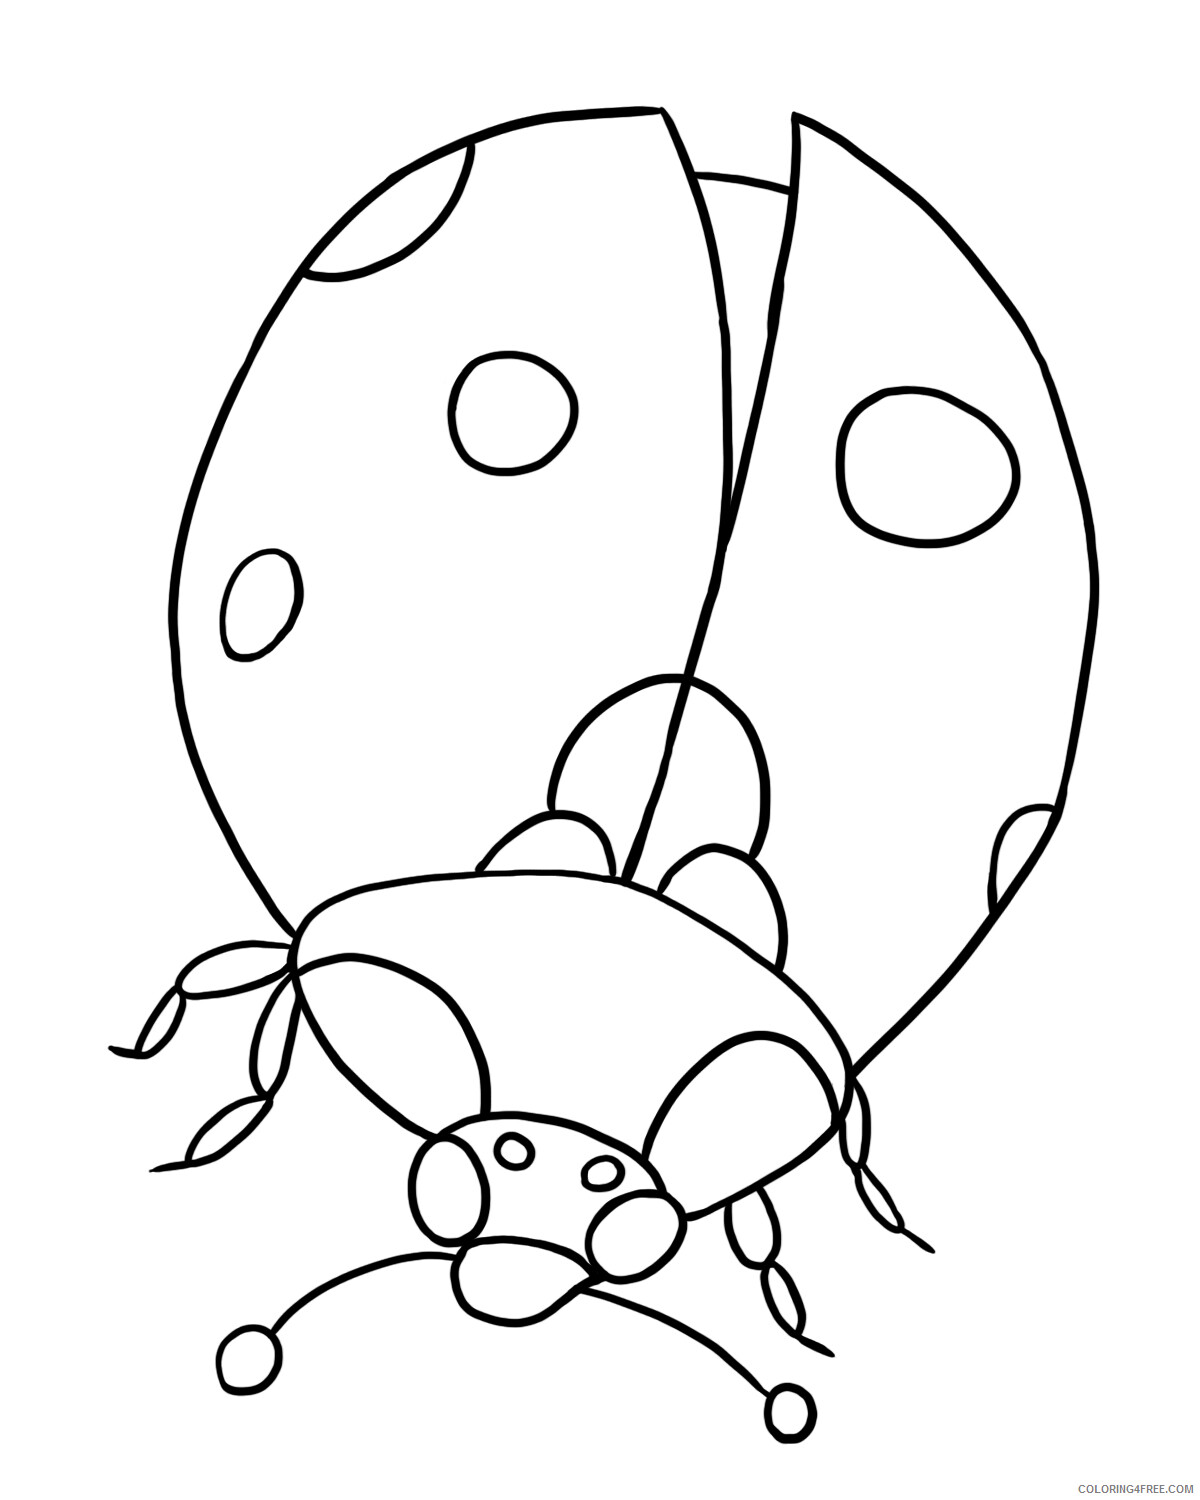 Ladybug Coloring Pages Animal Printable Sheets Lady Bug 2021 3076 Coloring4free